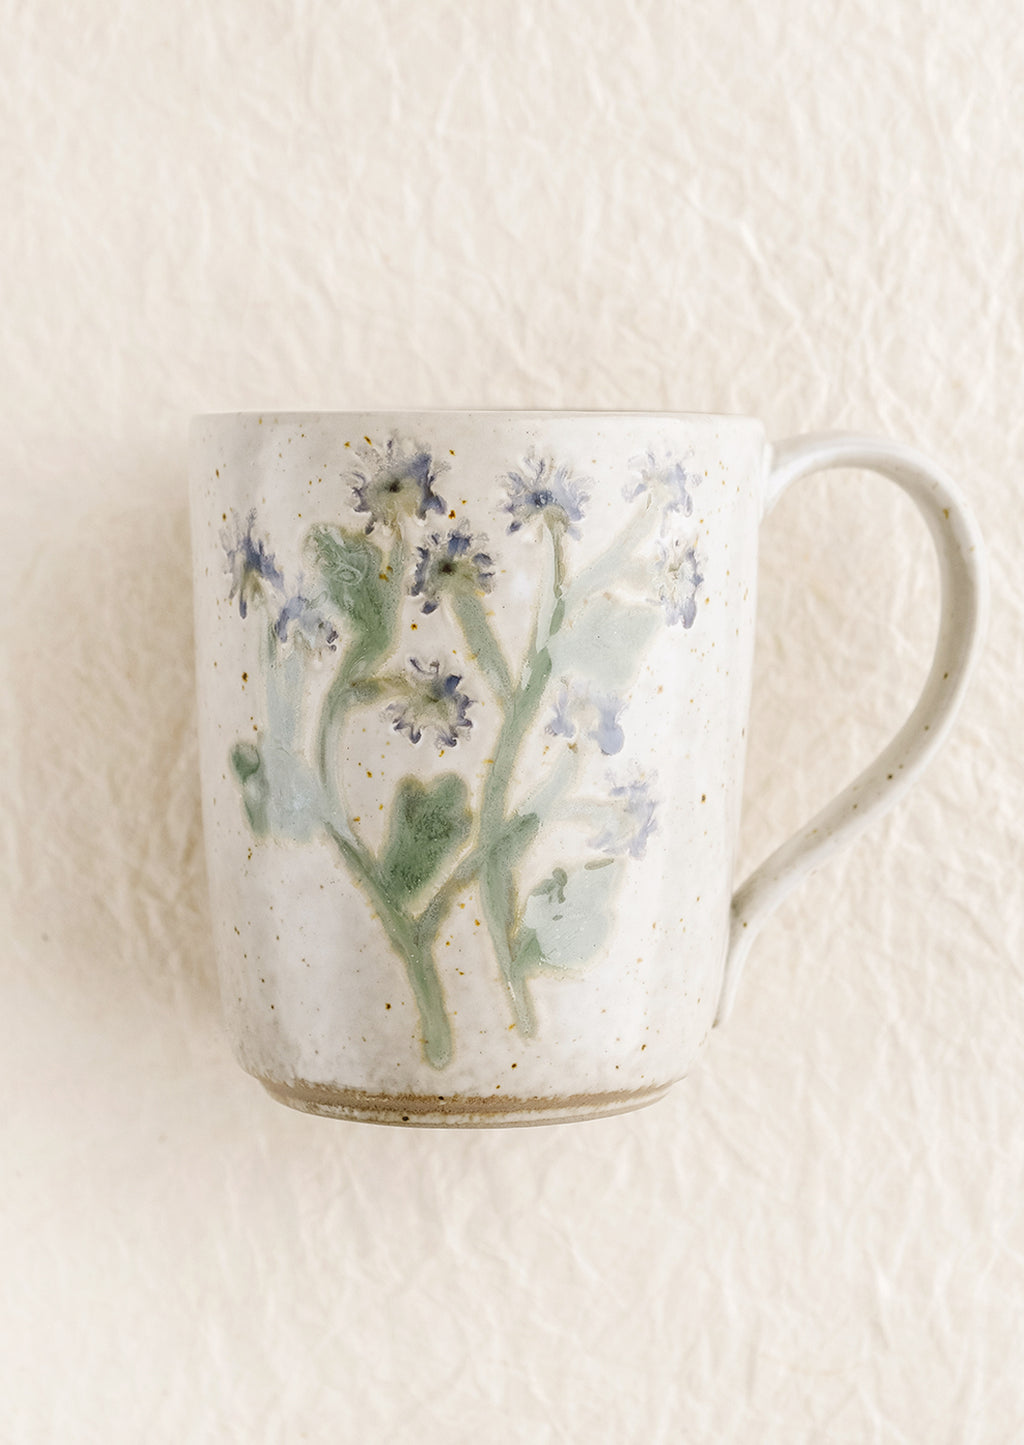 Bachelor's Button: Wildflower Ceramic Mug